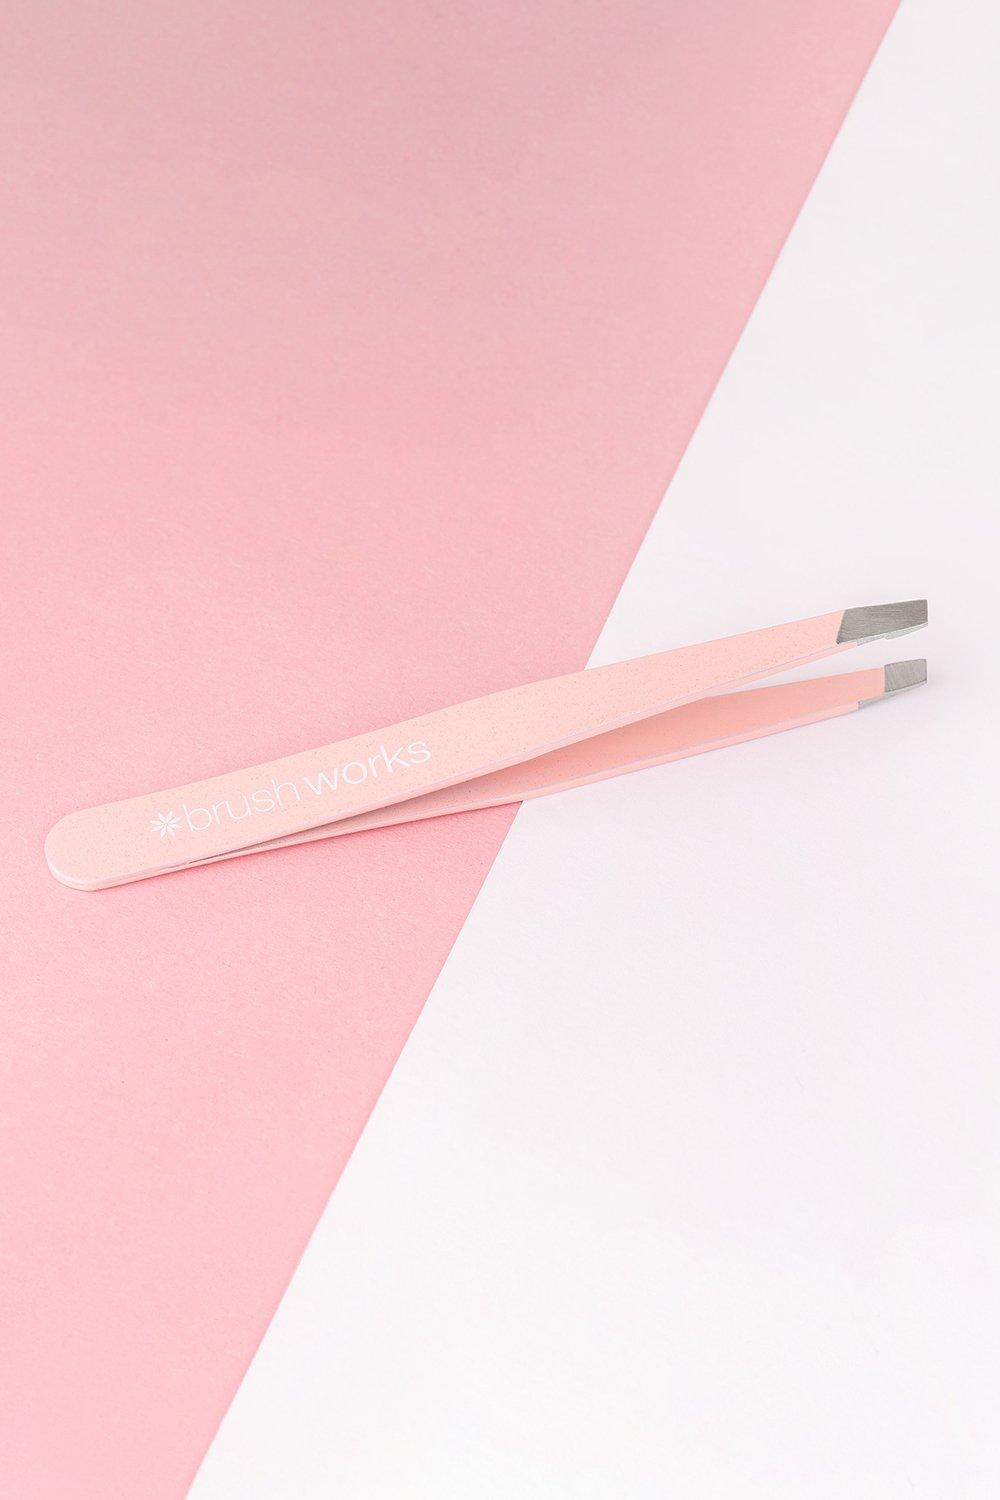 Brushworks Precision Slanted Tweezers- Pink  - Size: ONE SIZE